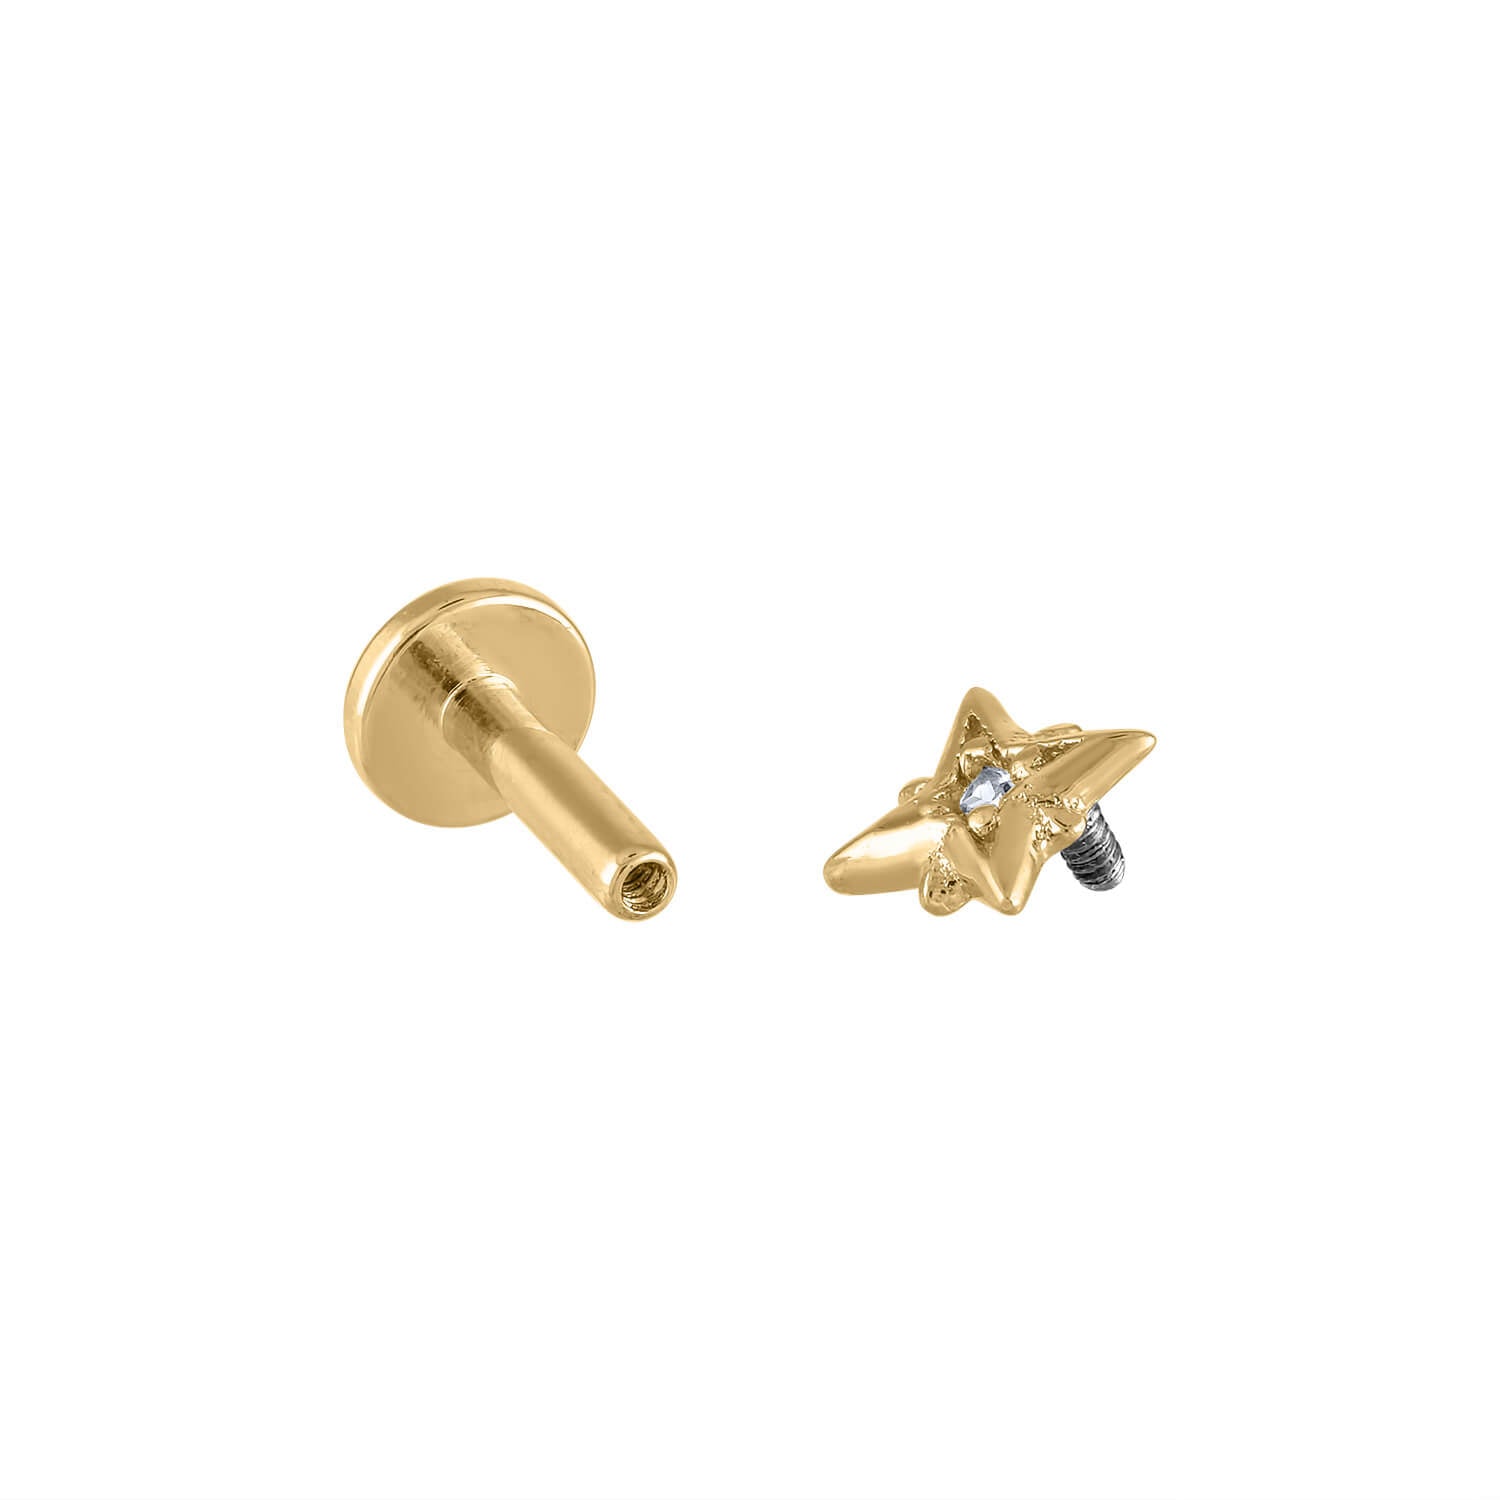 Push Pin vs Threaded Screw Flat Back Piercing Jewelry